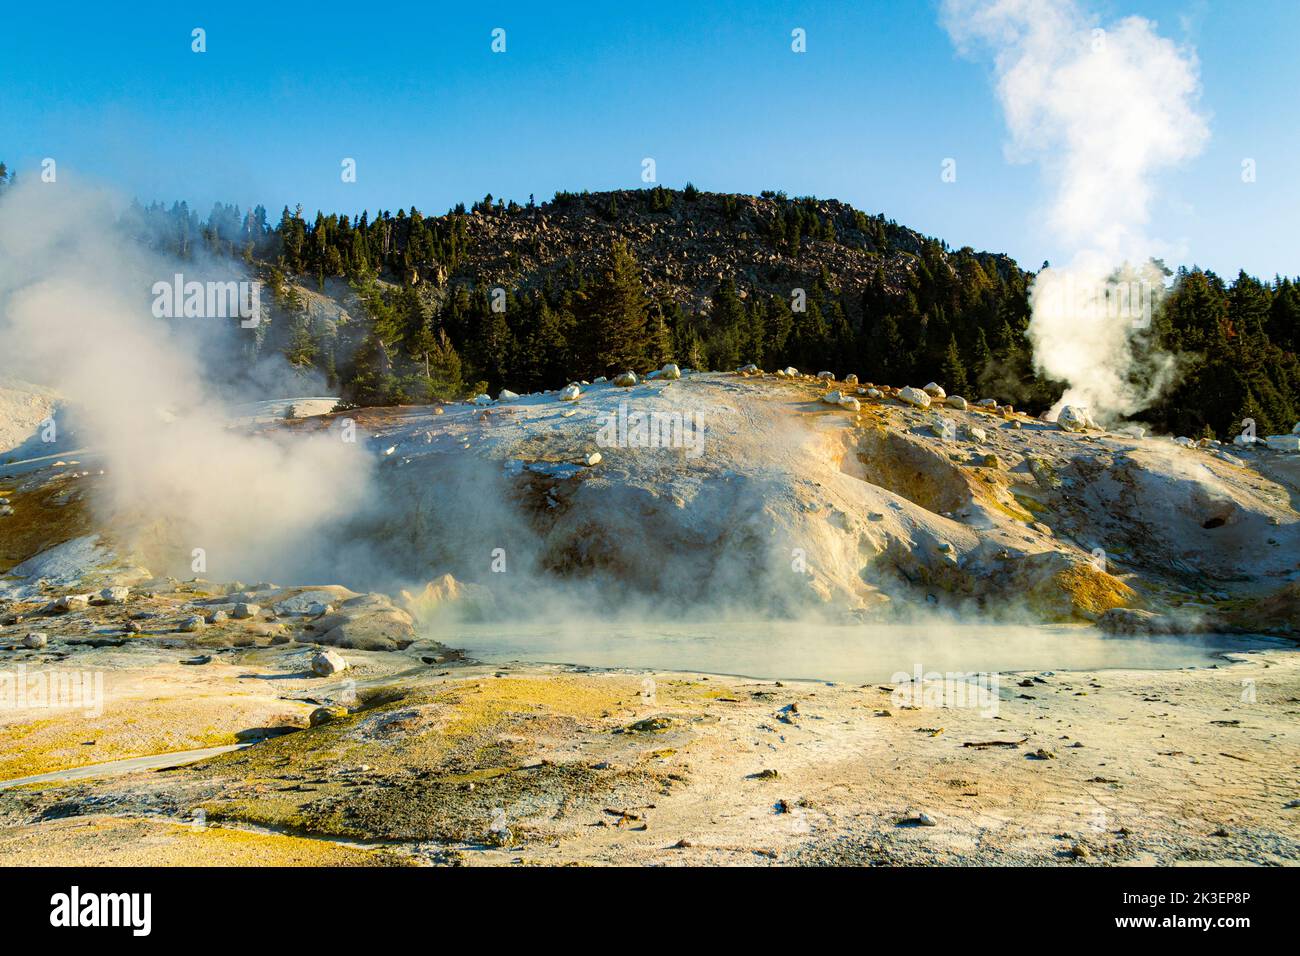 Großer kochender Schlammtopf in Bumpass Hell im Lassen Volcanic National Park - Nordkalifornien, USA. Stockfoto